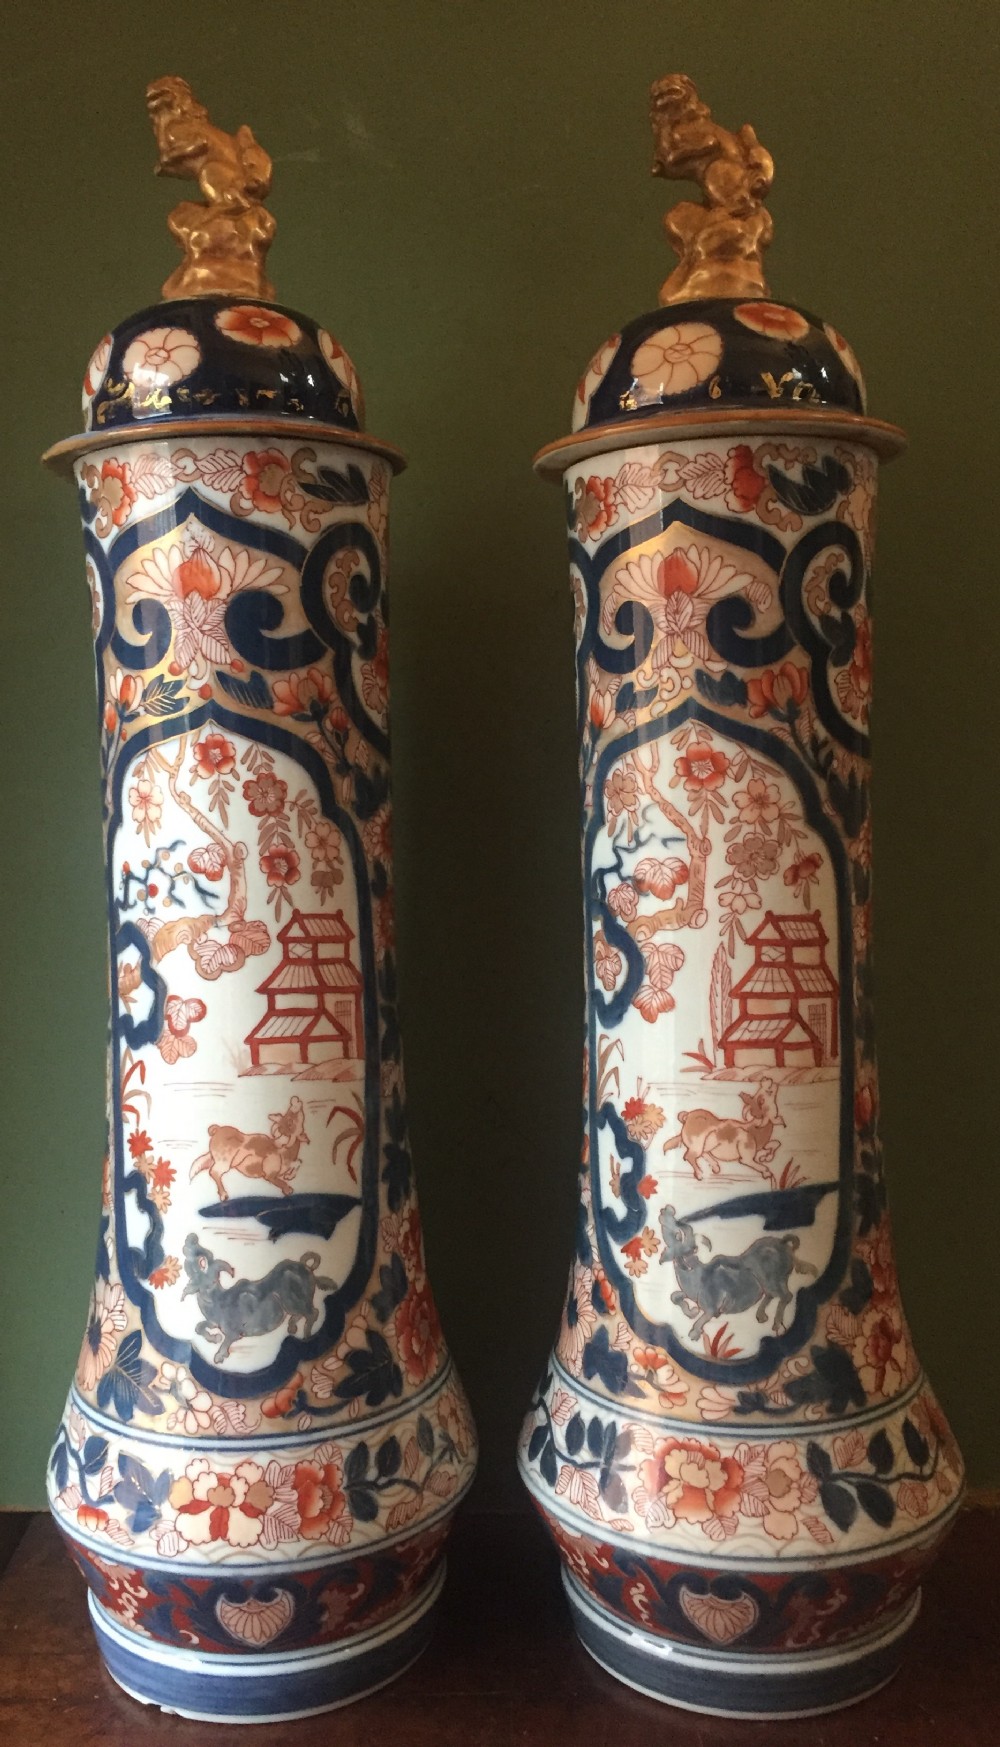 fine pair of mid c19th japanese imari pattern porcelain lidded vases of unusual shape and form